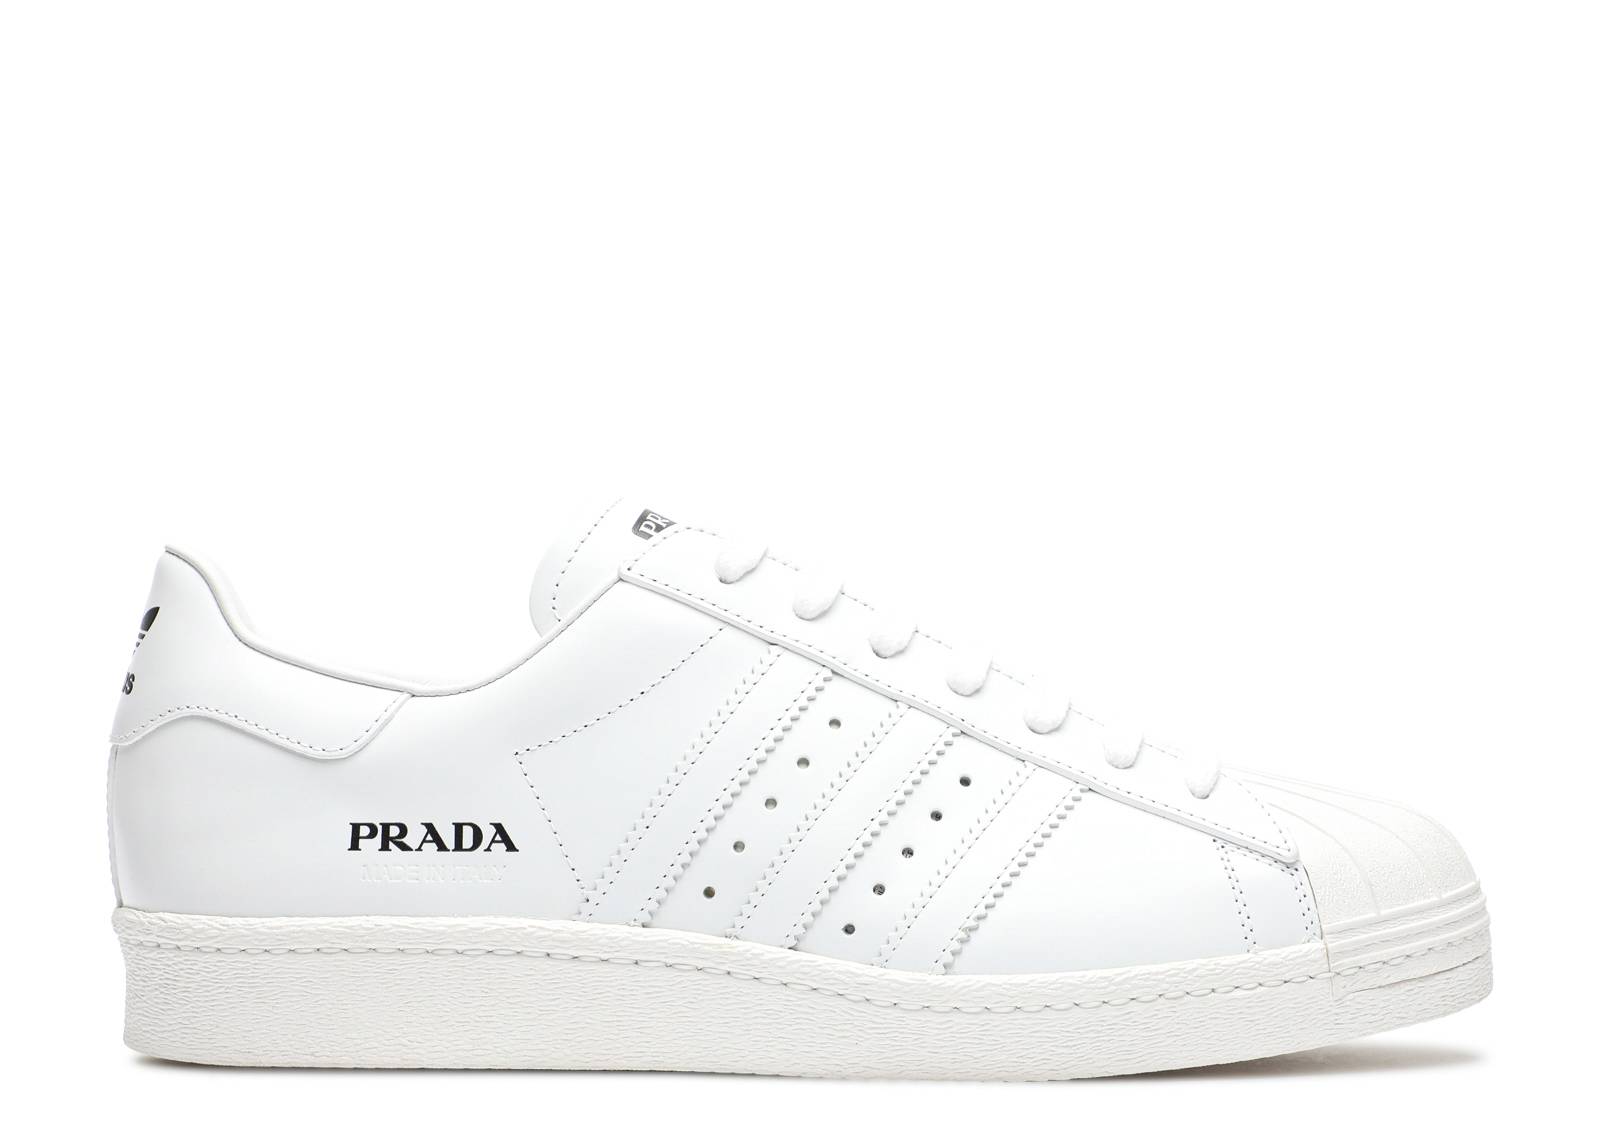 Prada x Superstar 'Core White' Adidas Release